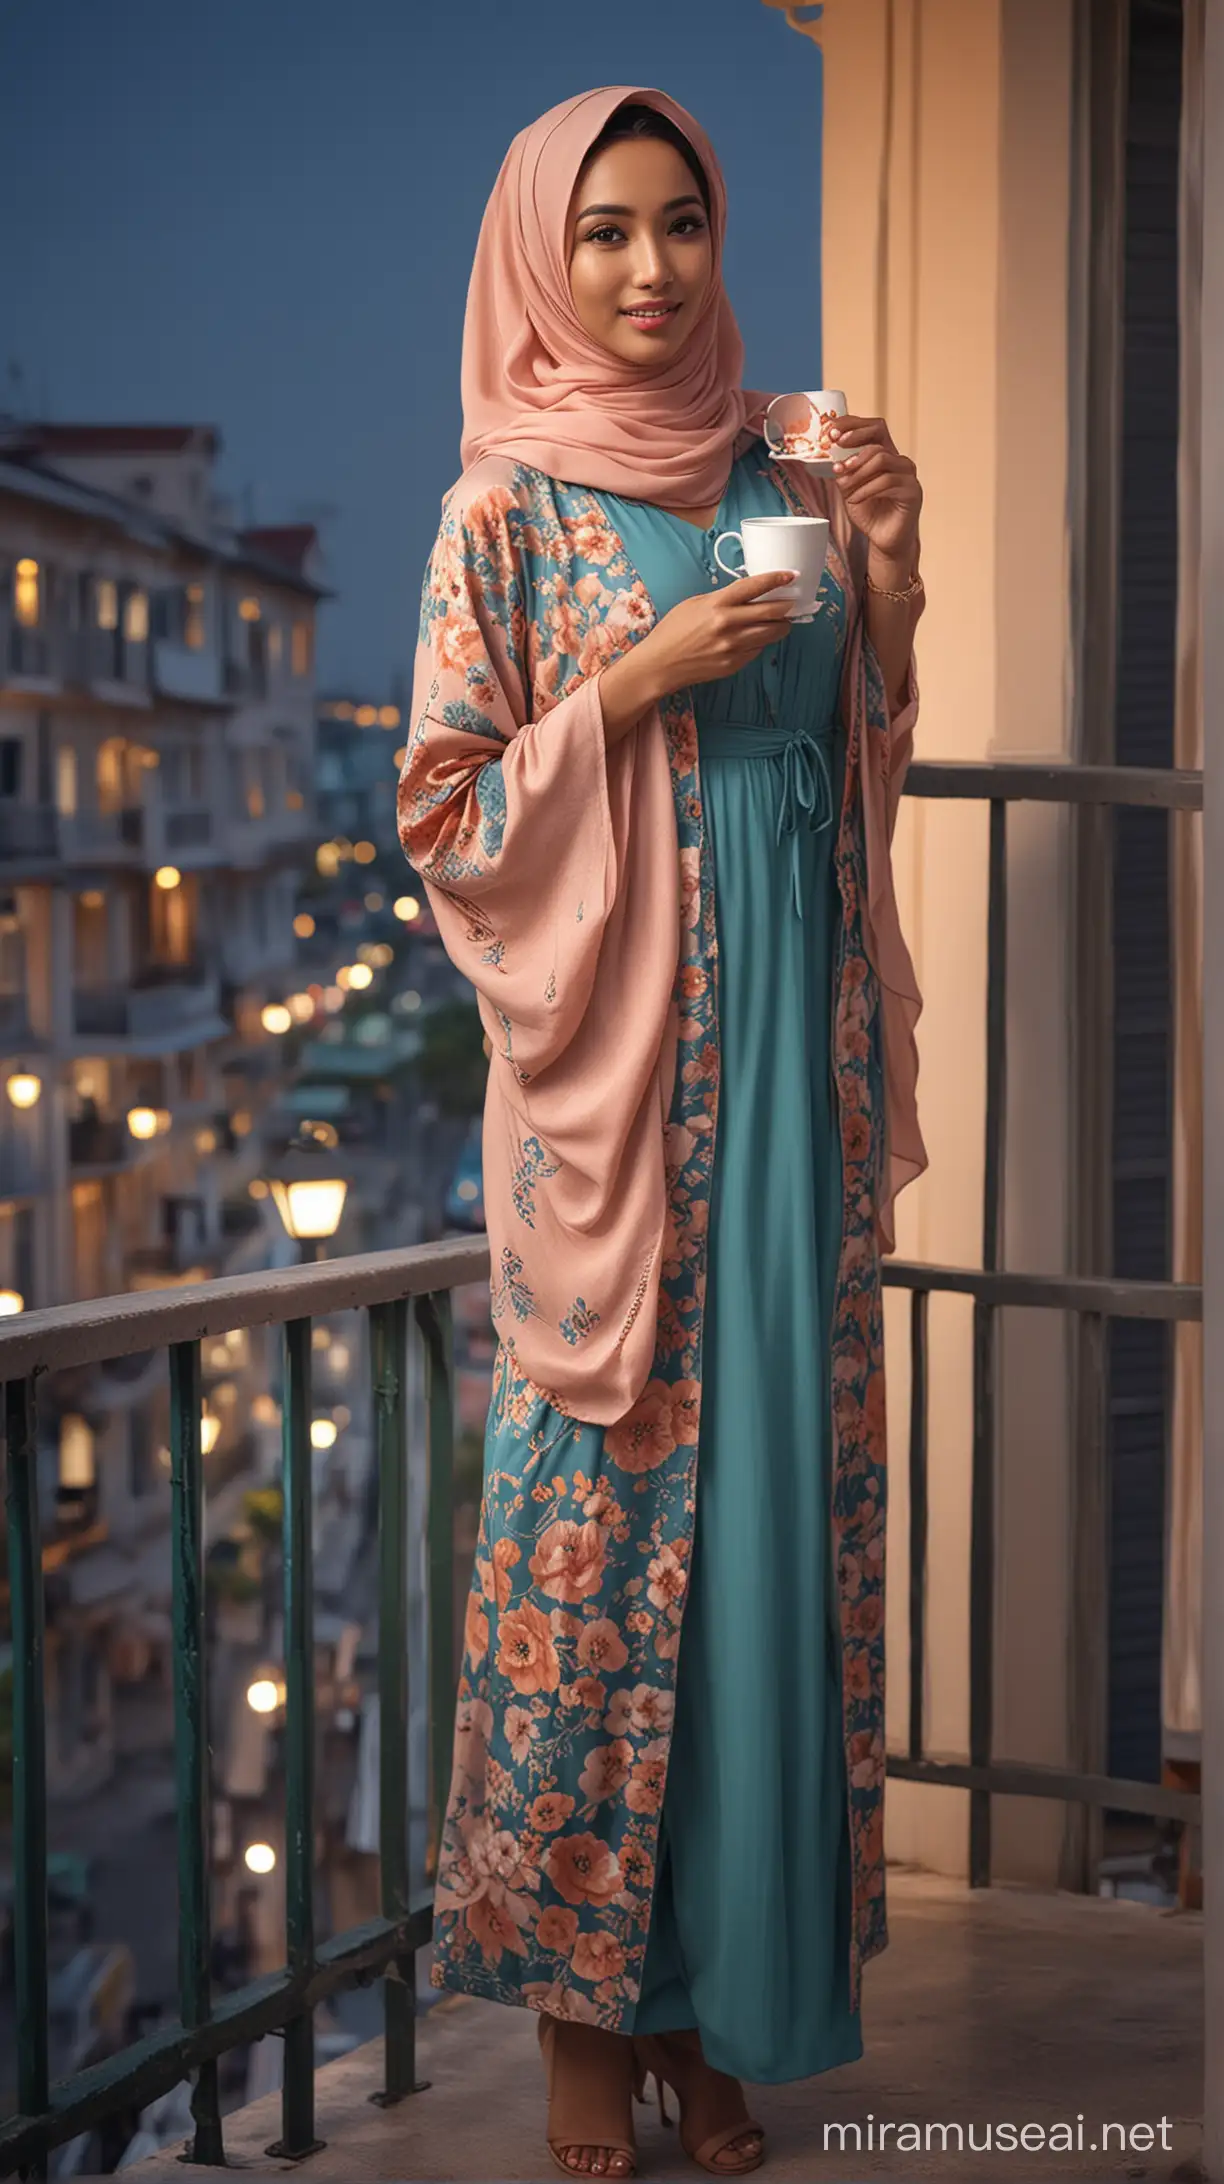 Stylish Malay Woman Enjoying Evening Coffee on Balcony Overlooking Picturesque Street